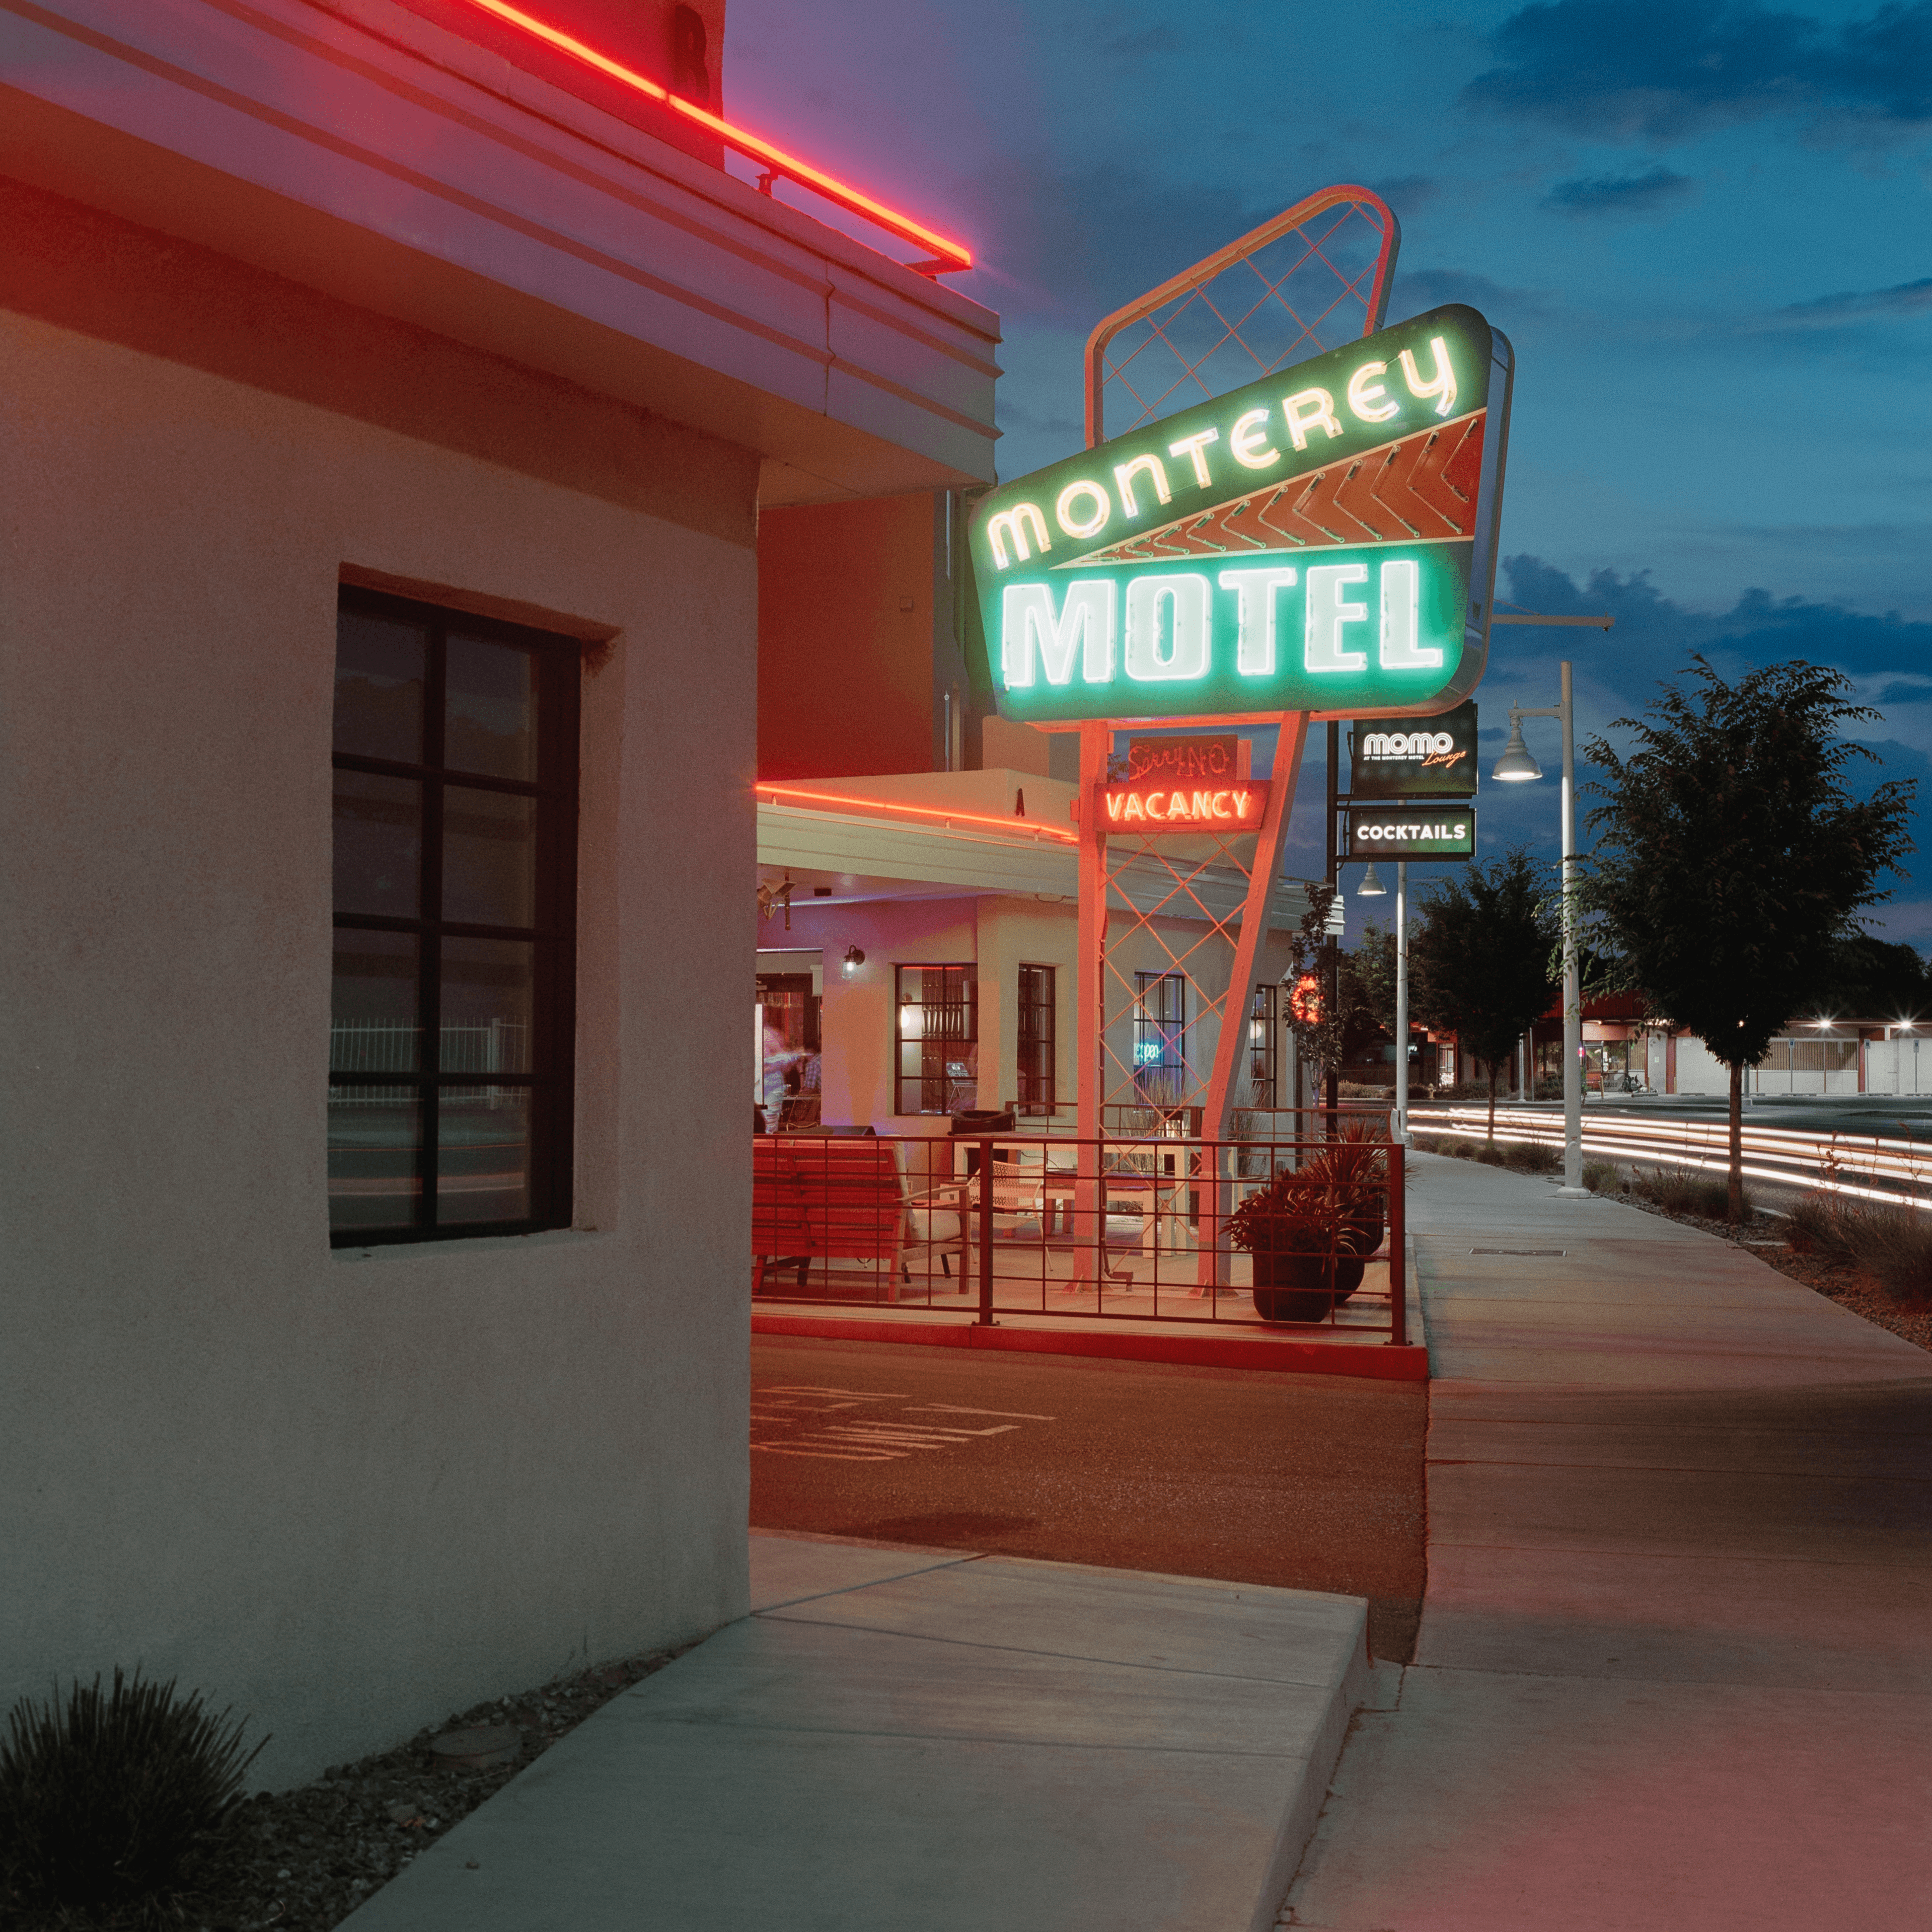 Monterey Motel - Nathan A. Bauman